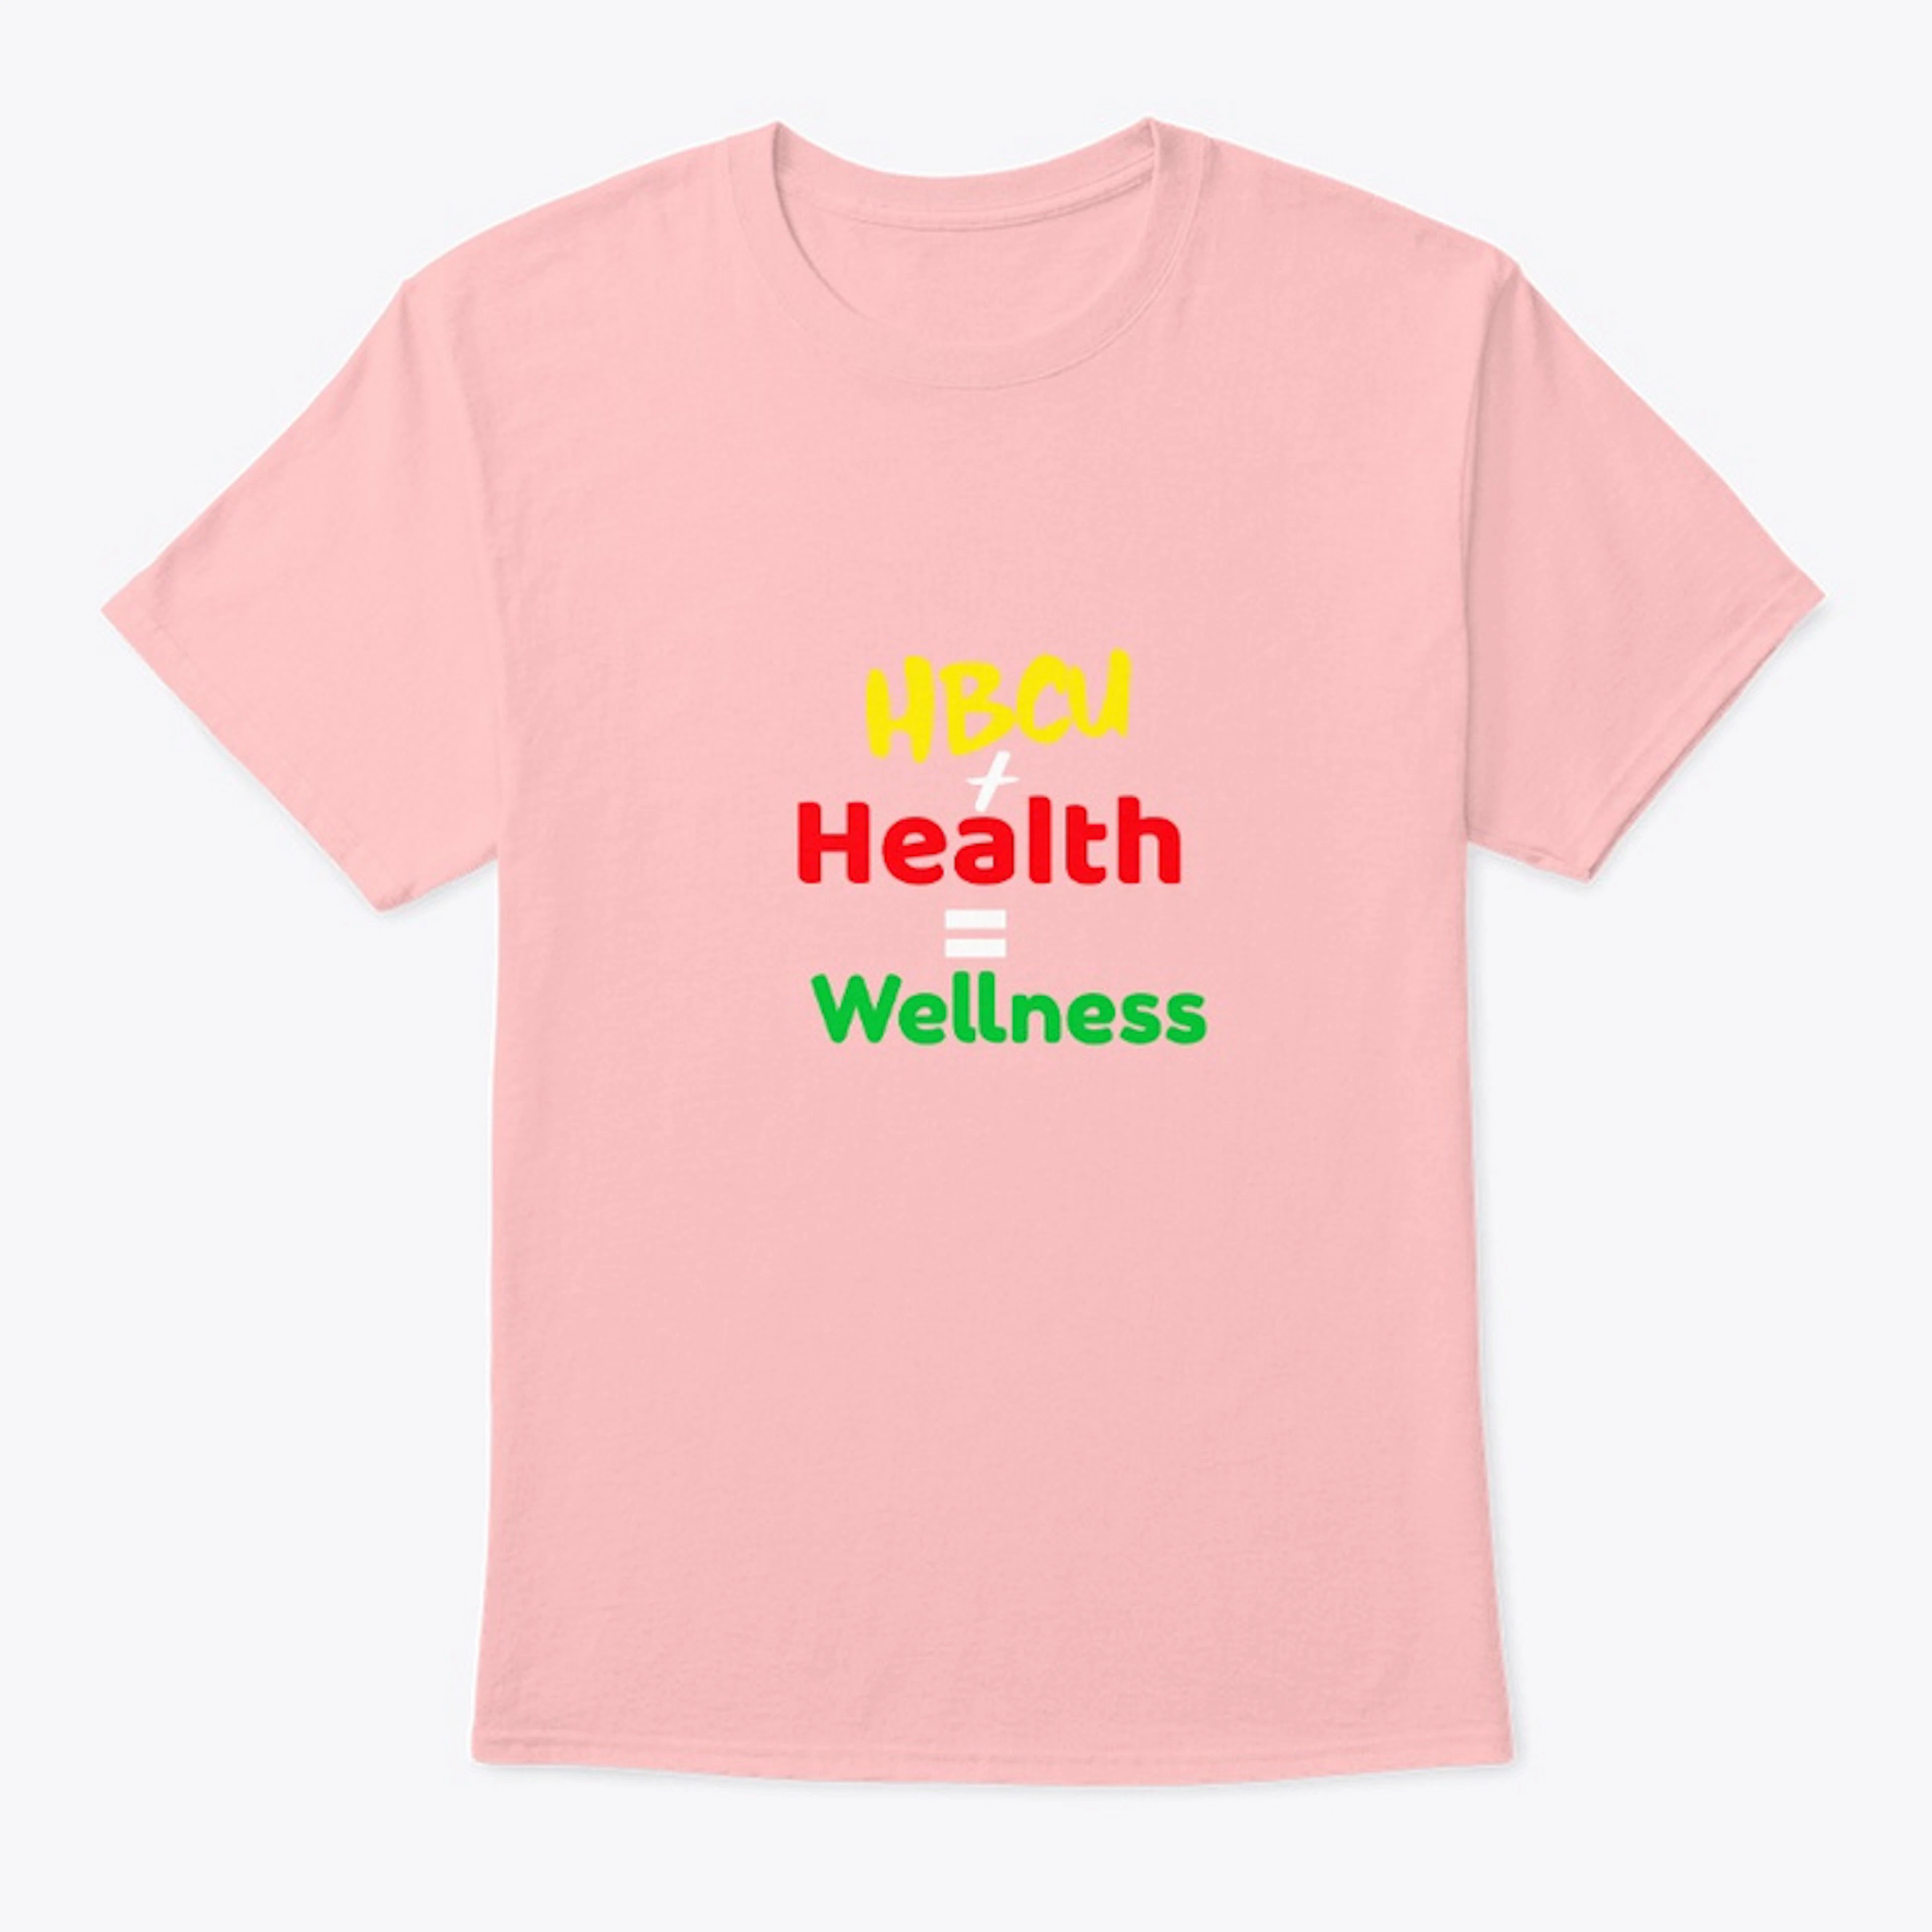 HBCU health equals wellness